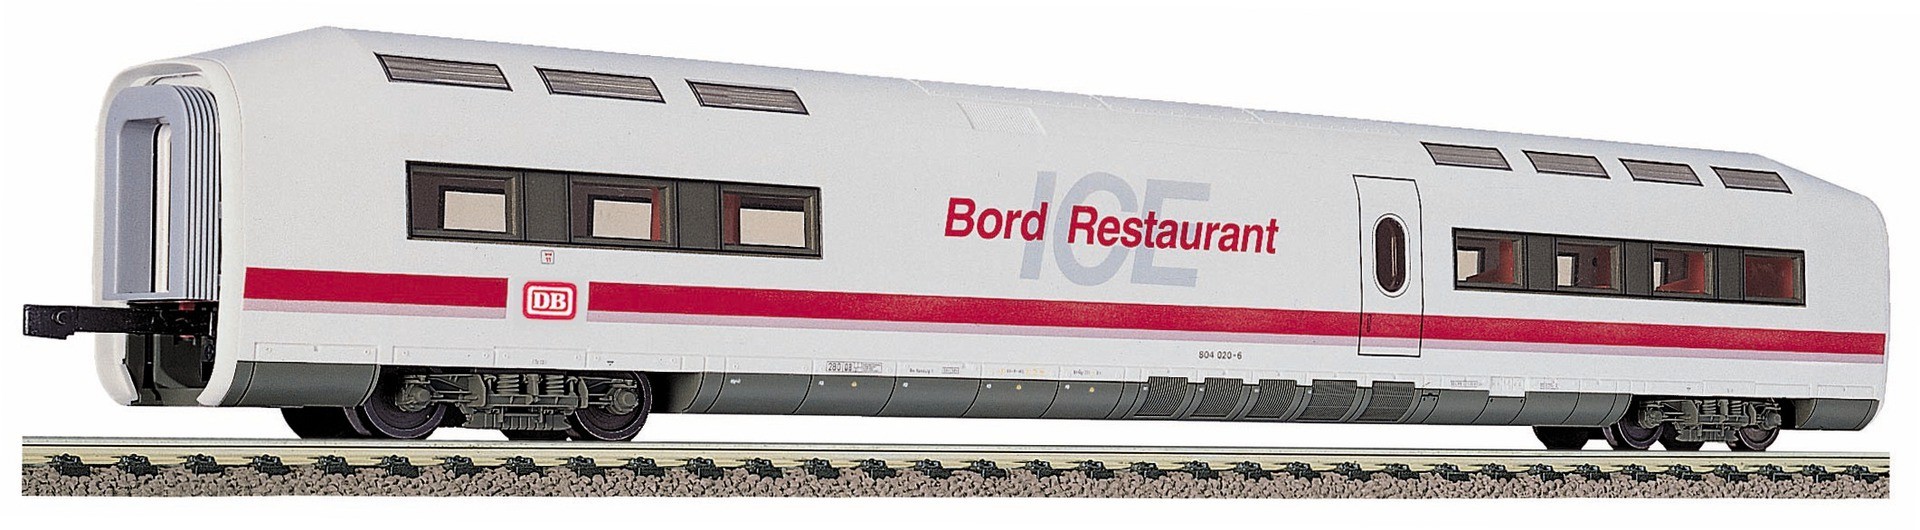 Trains miniatures : locomotives et autorail - ICE 1 coach On-board res